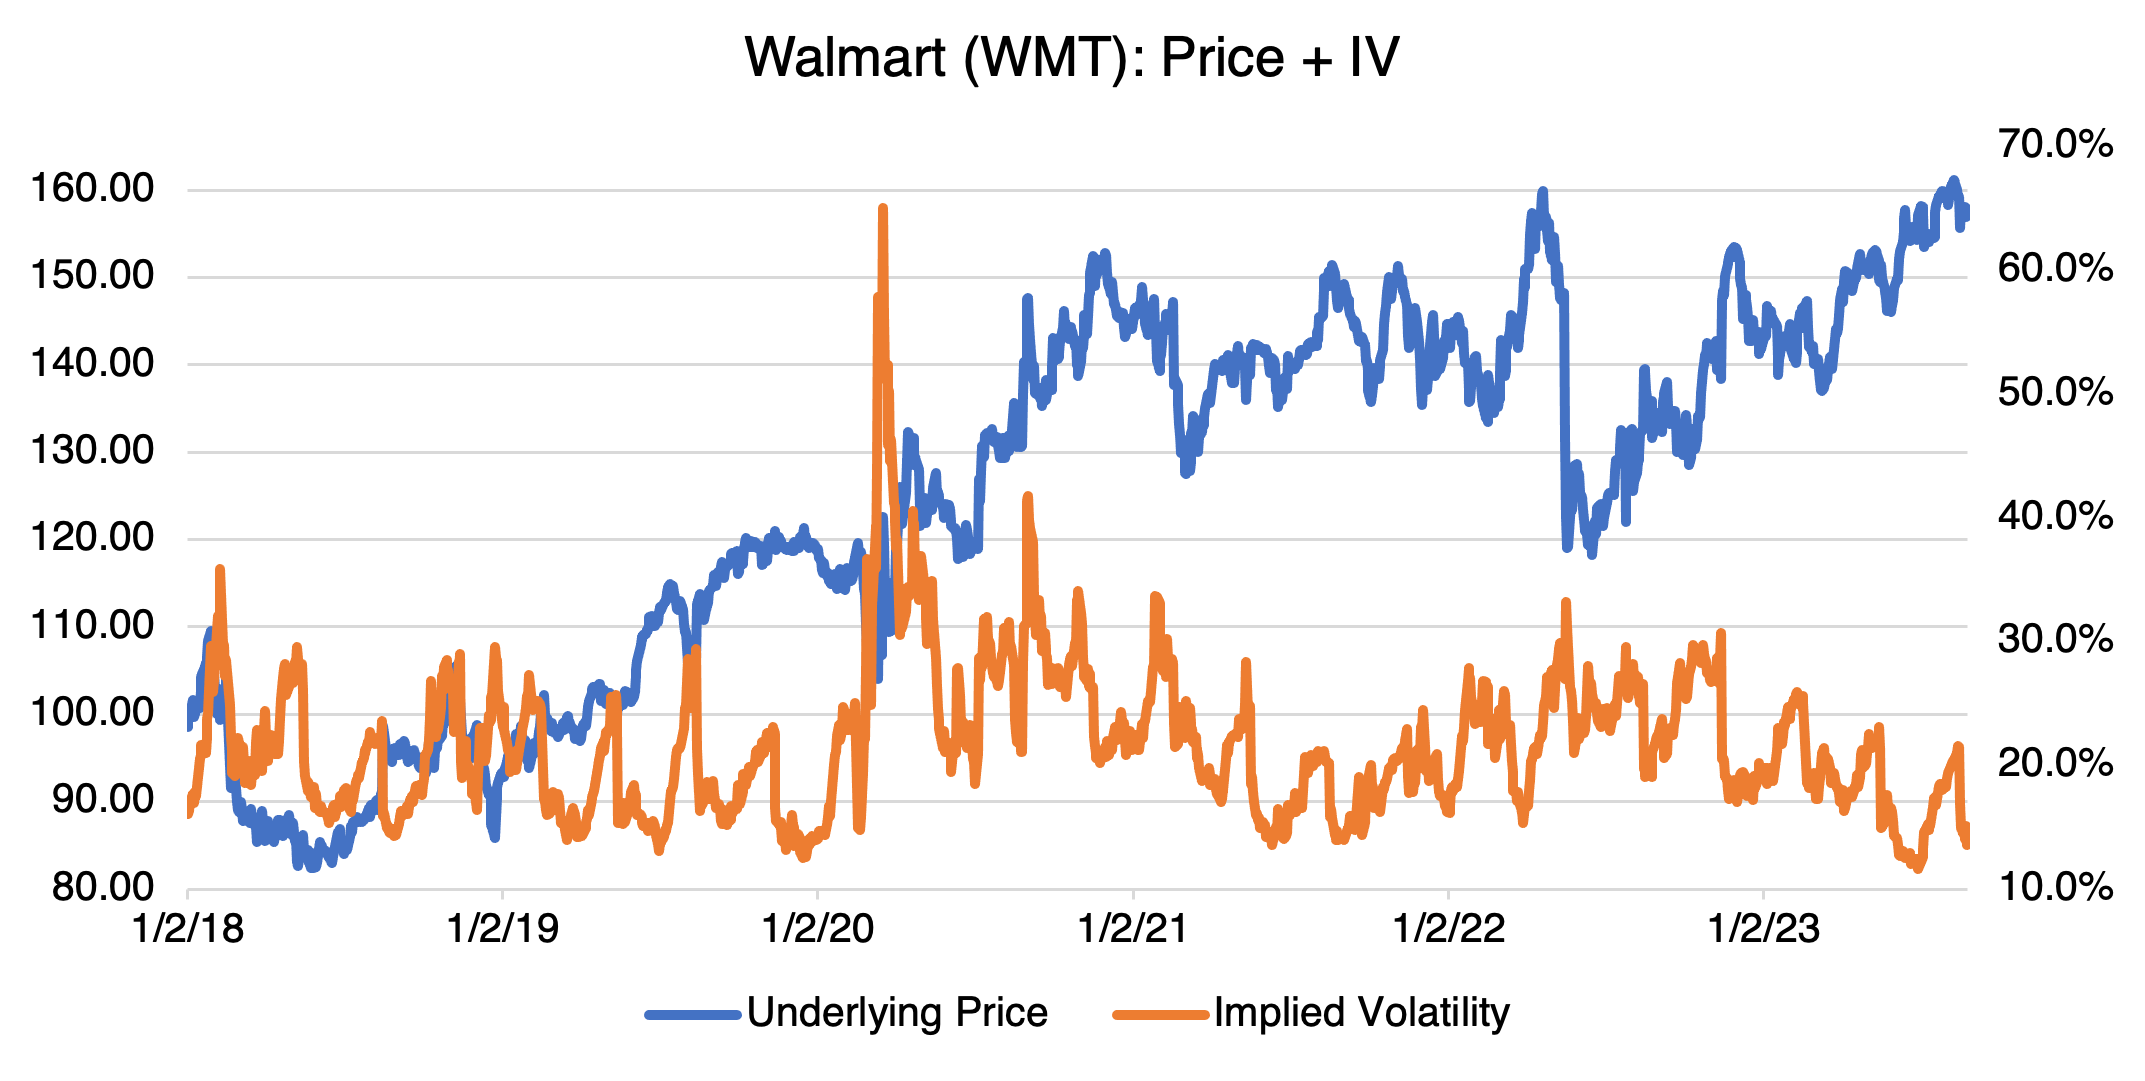 Walmart Price + IV